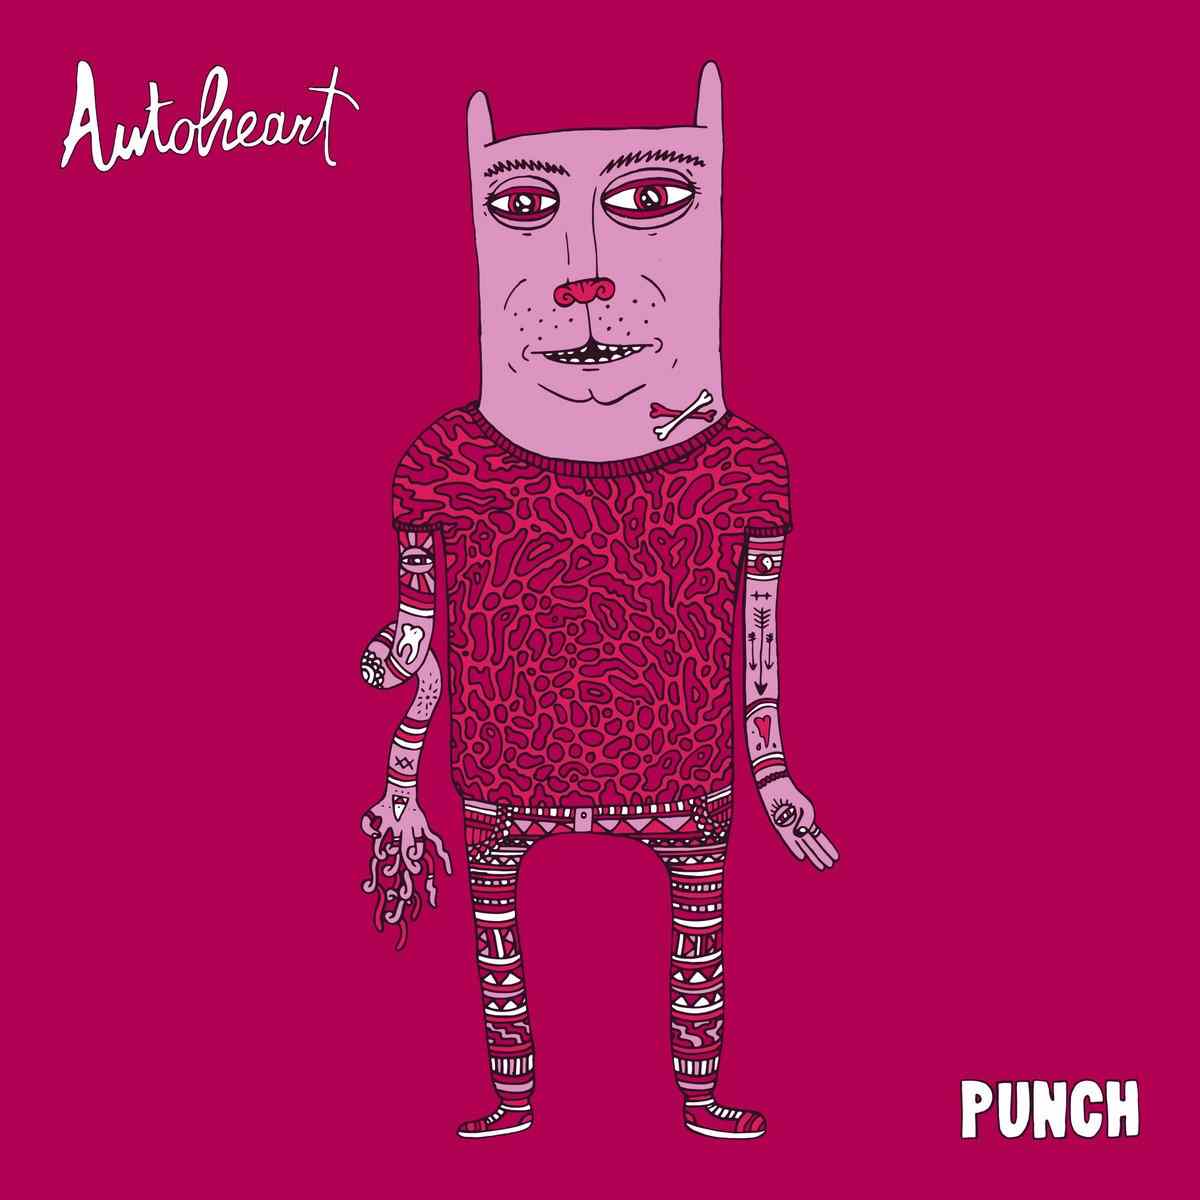 Punch - Autoheart